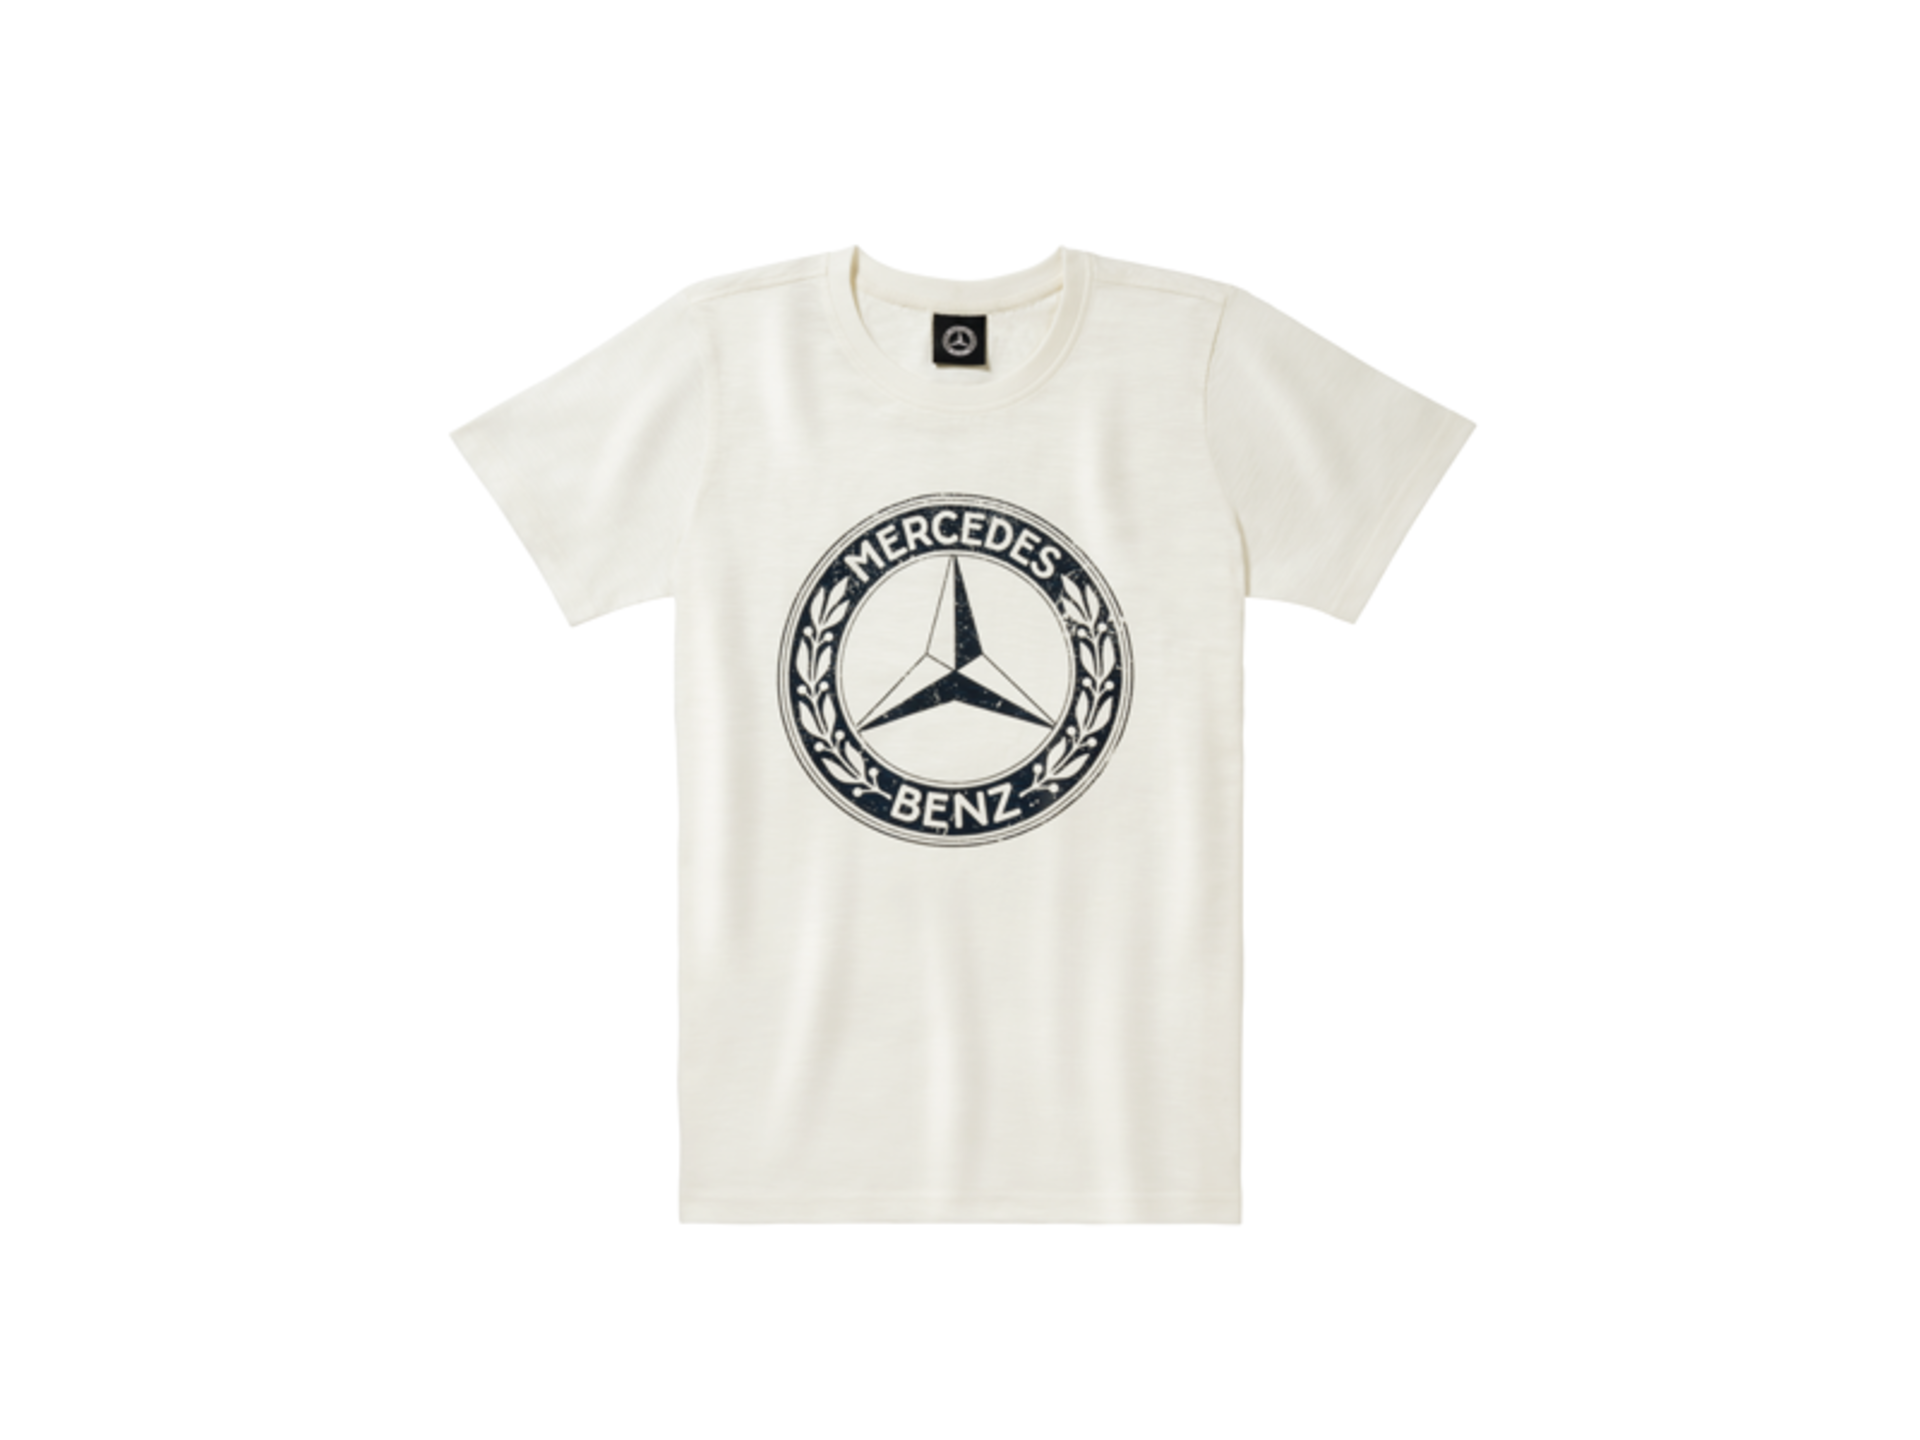   Mercedes Men's T-shirt, Off-white, Classic M